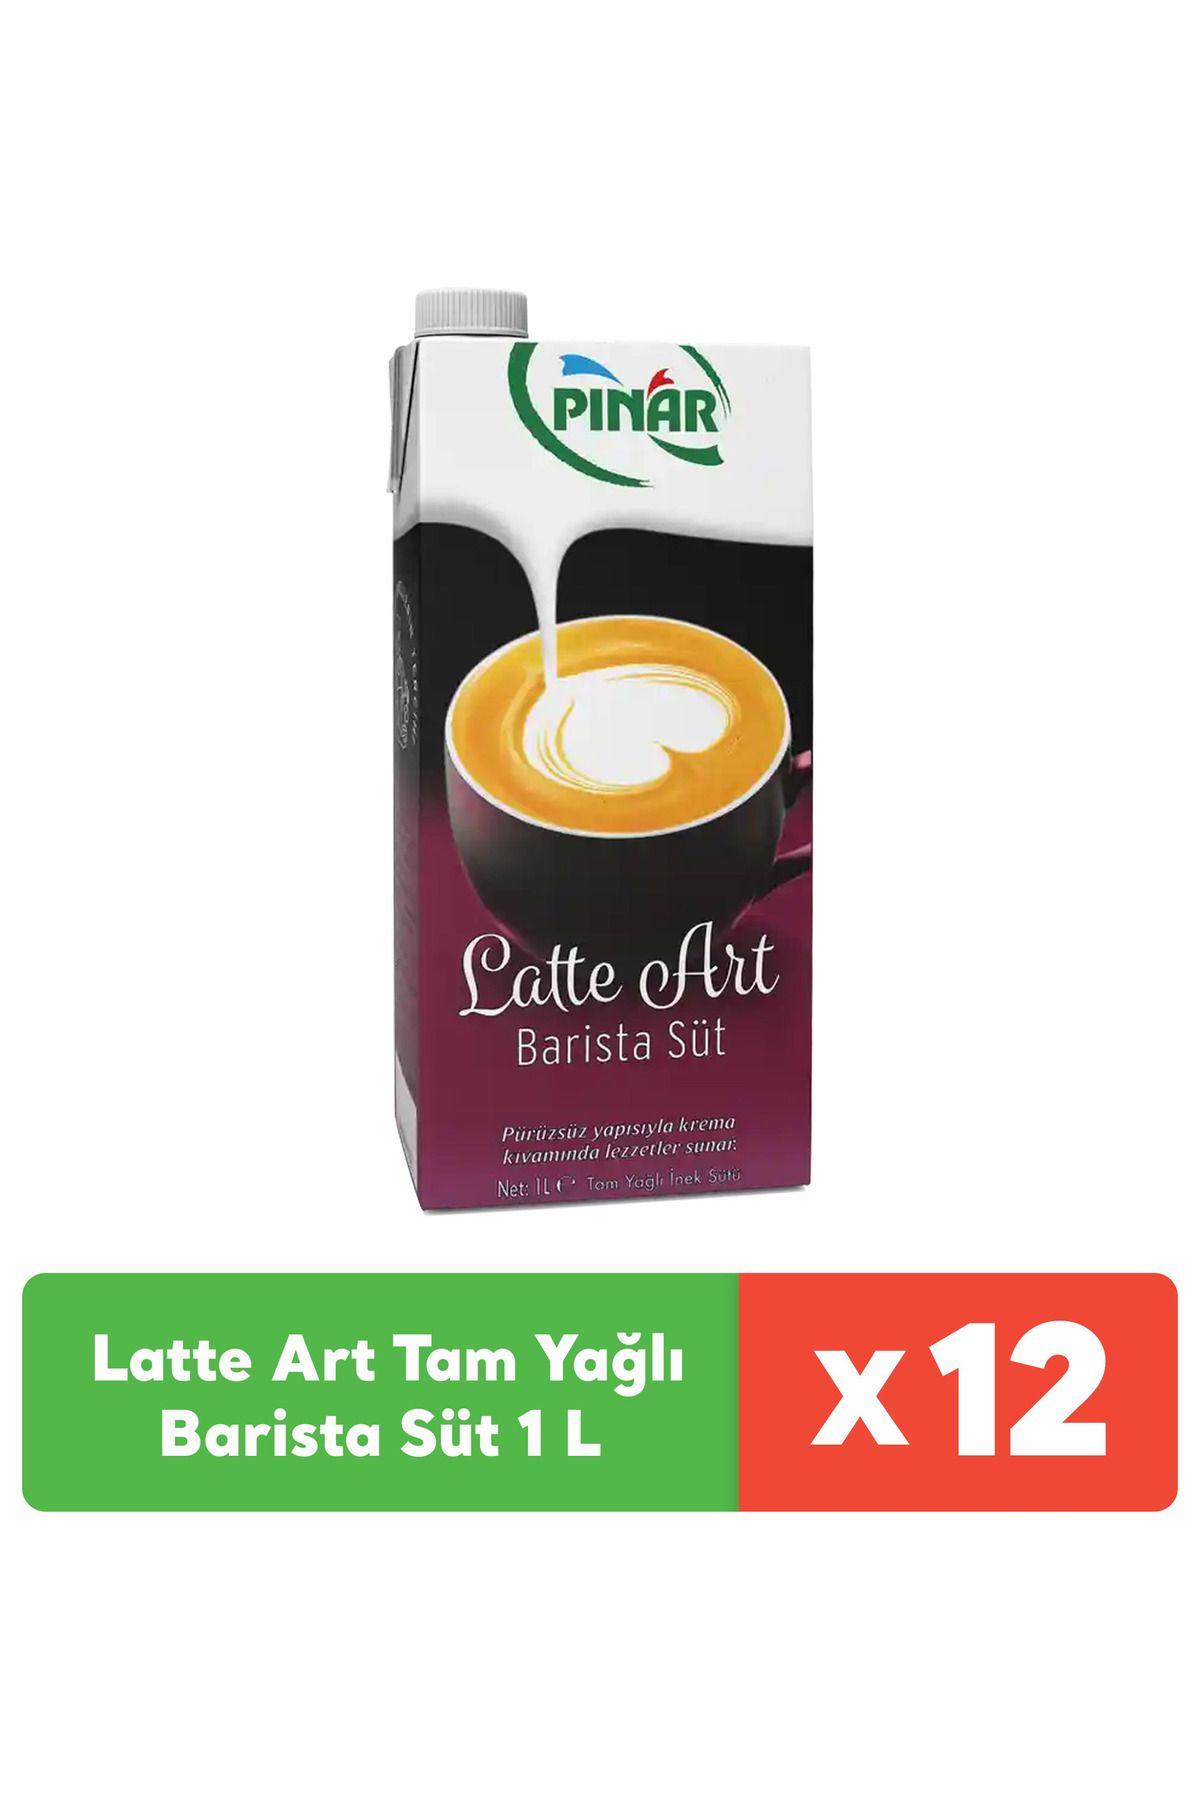 Pınar Latte Art Tam Yağlı Barista Süt 1 L x 12 Adet